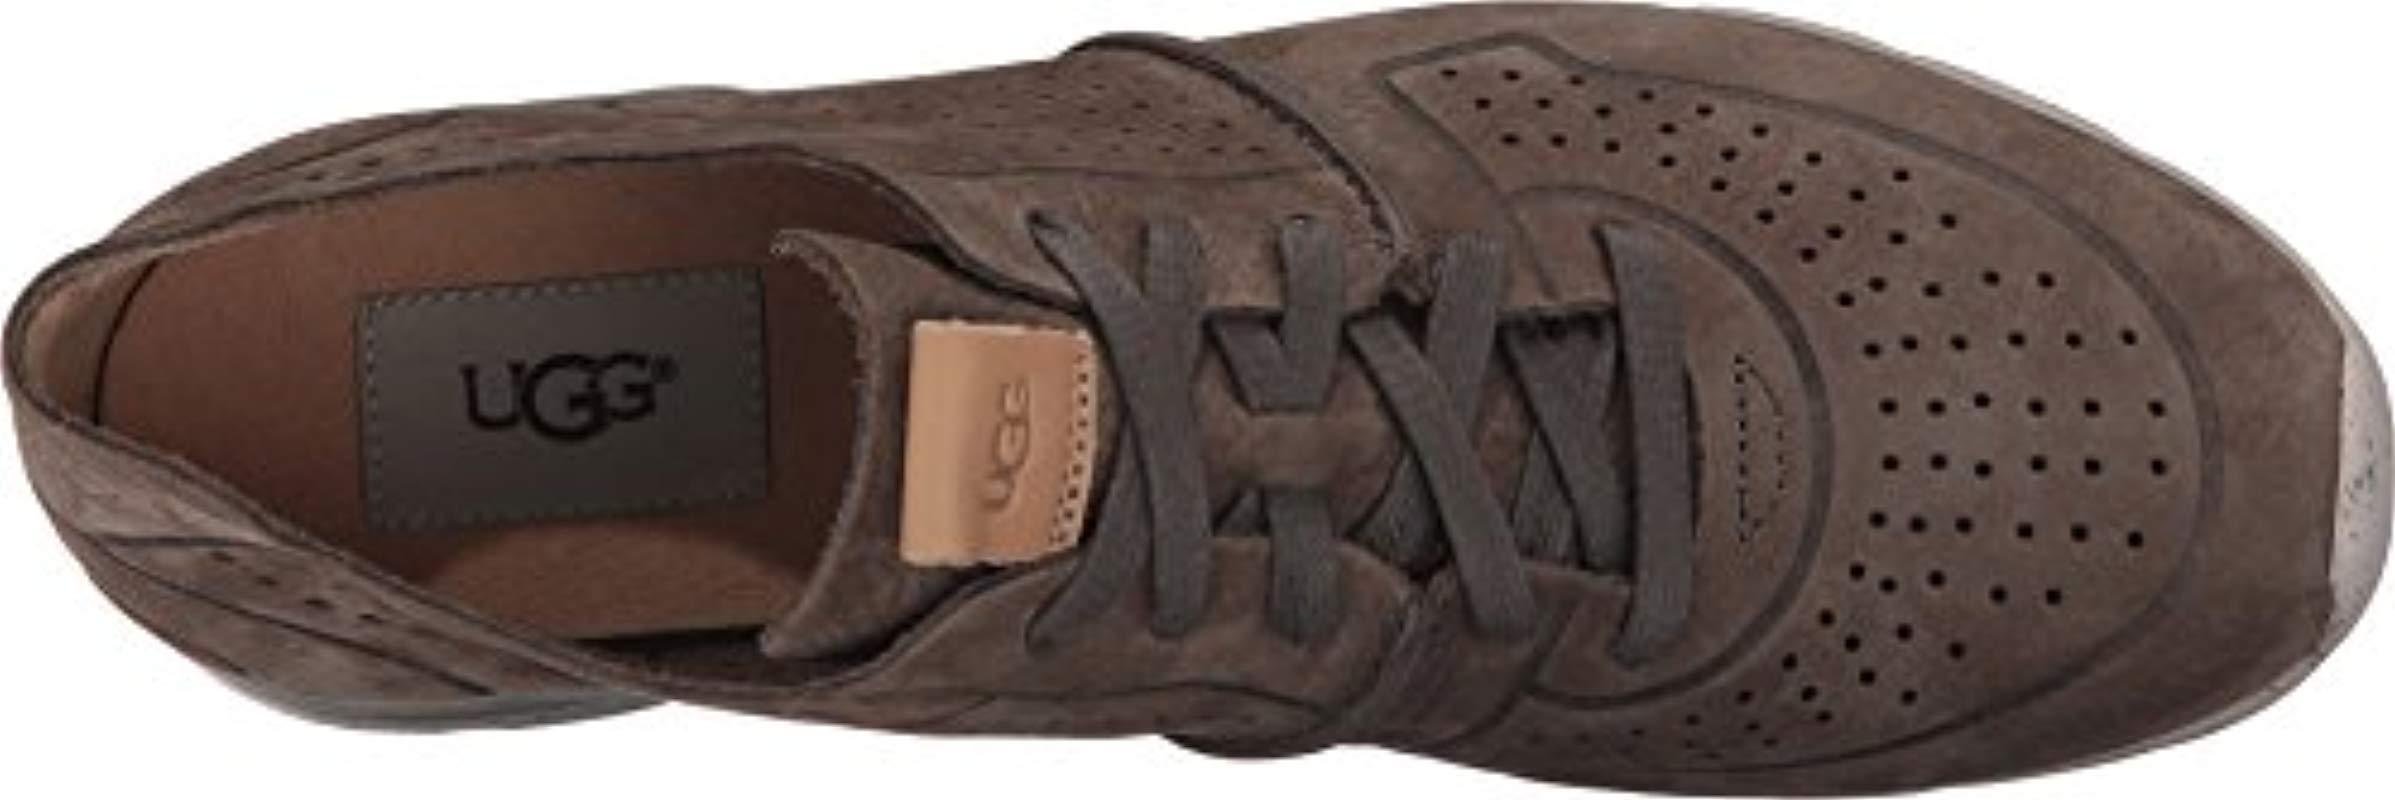 UGG Leather Tye Fashion Sneaker,slate,7.5 M Us in Brown - Save 41% - Lyst